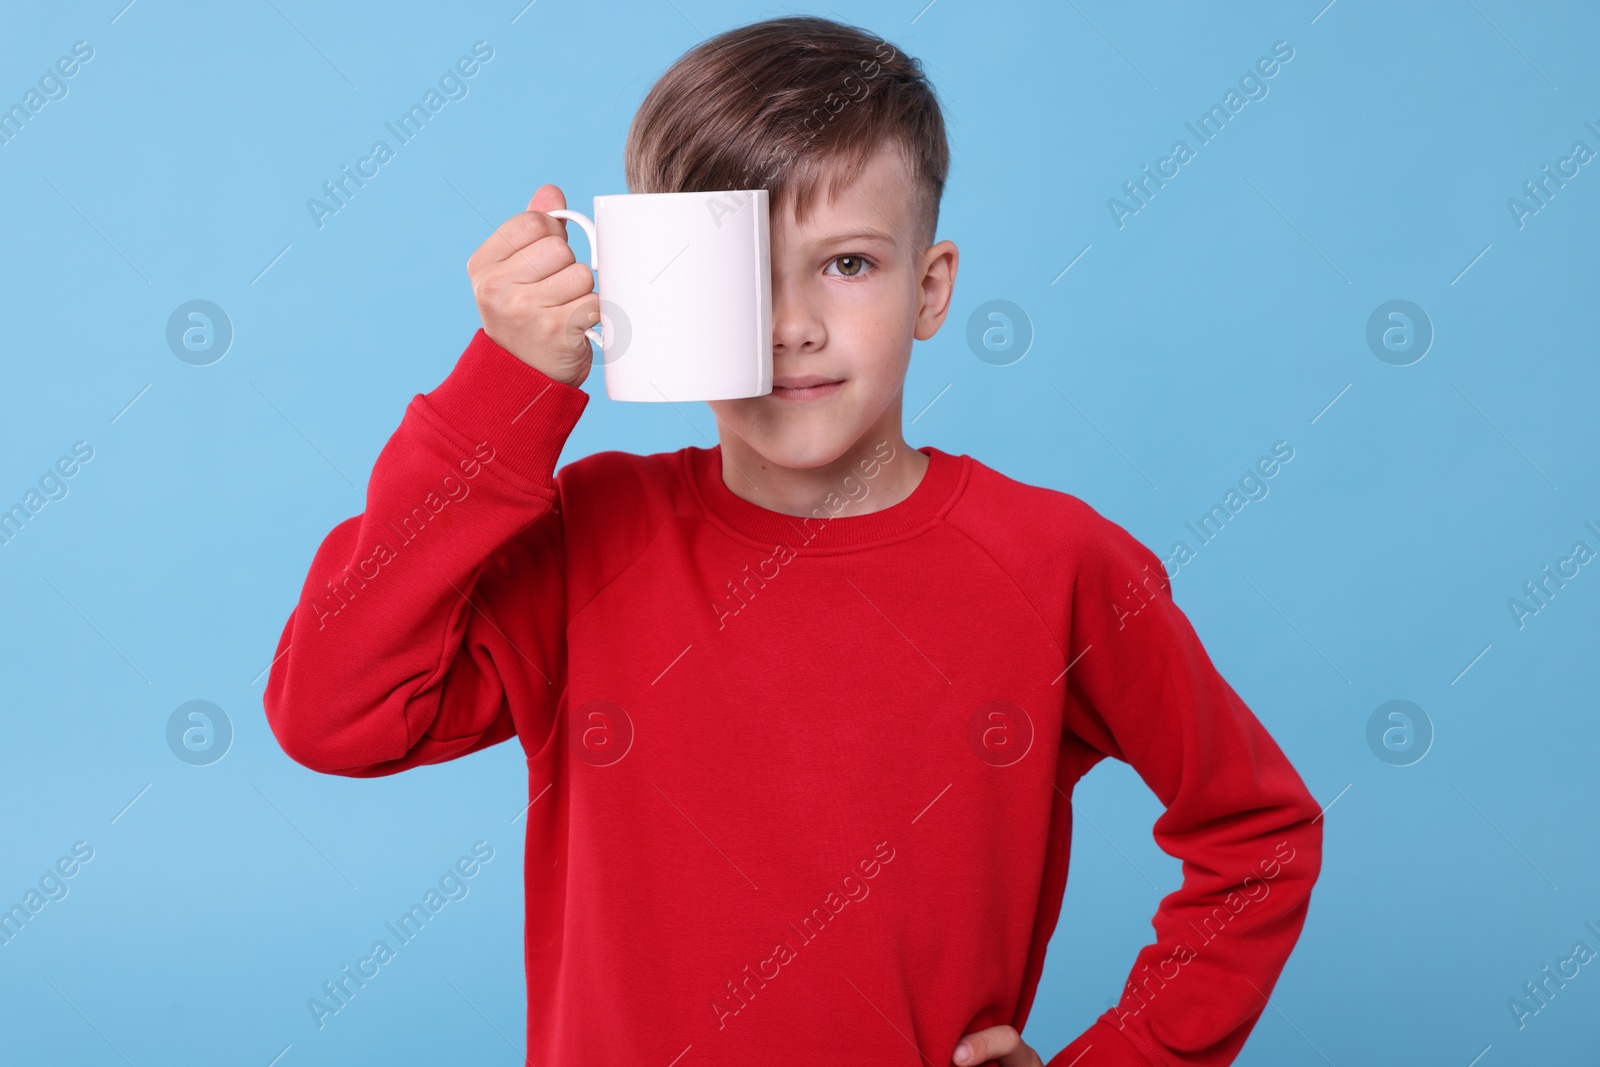 Photo of Cute boy covering eye with white ceramic mug on light blue background